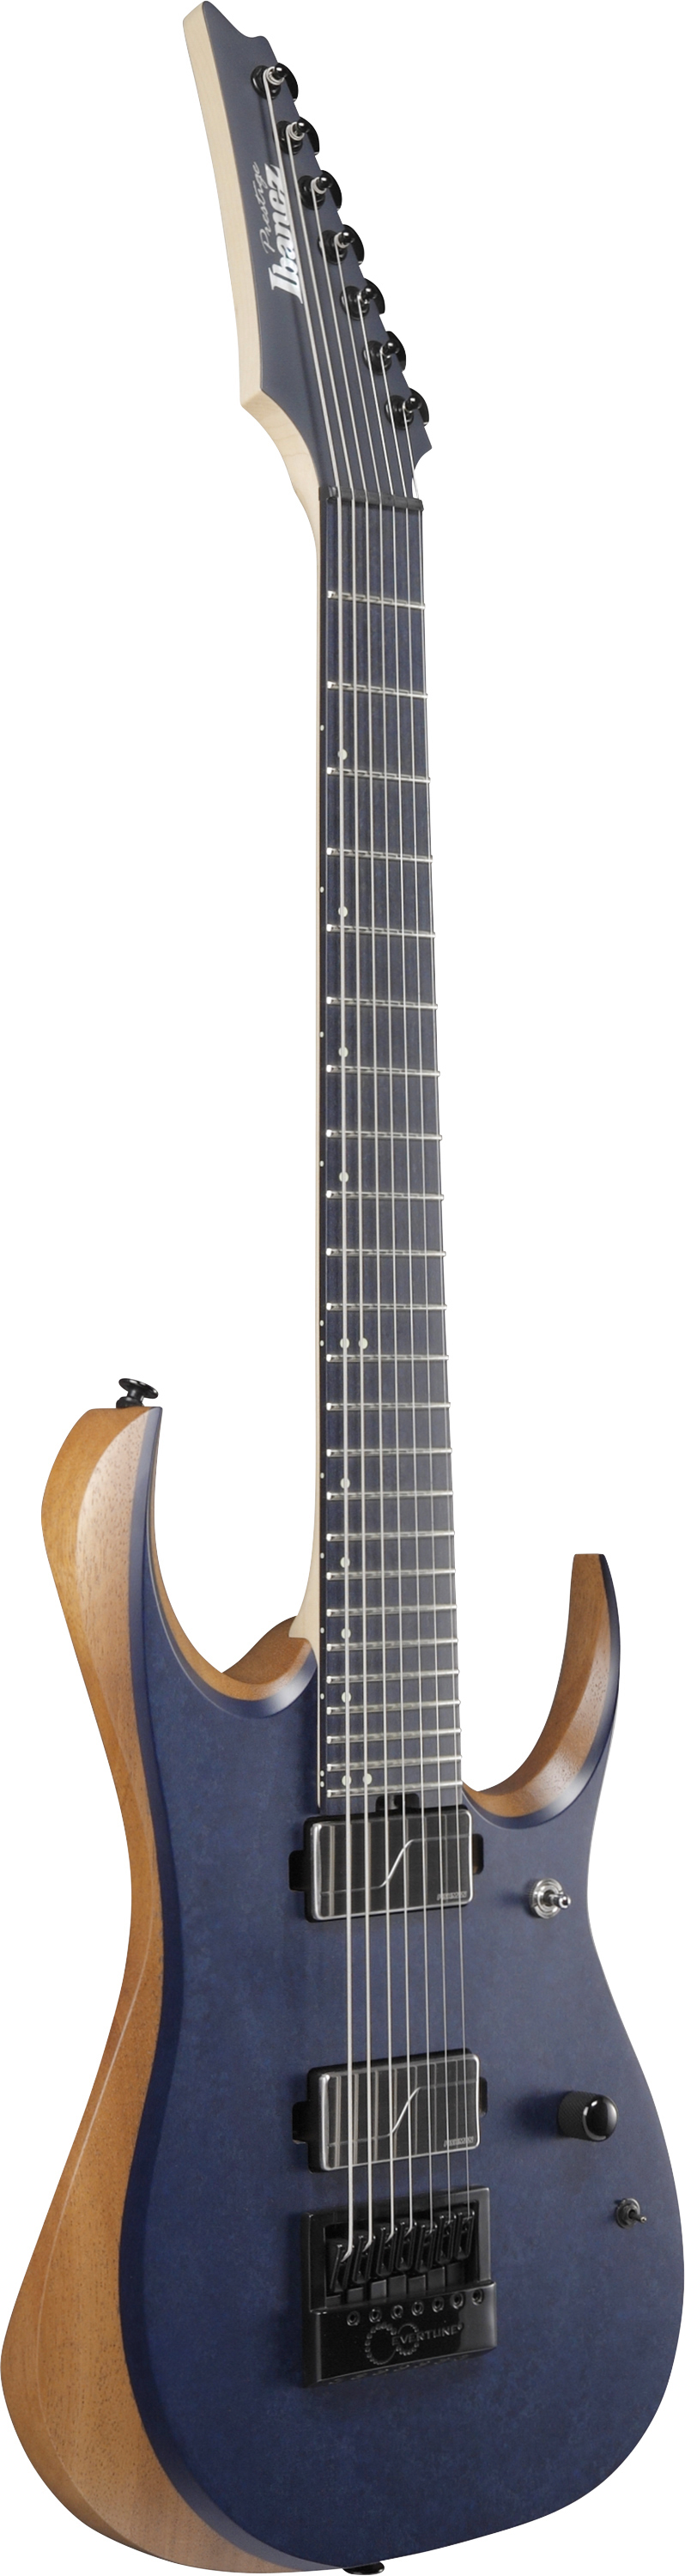 Ibanez Rgdr4527et Prestige Hh Ht Rich - Natural Flat - Guitare Électrique Forme Str - Variation 5